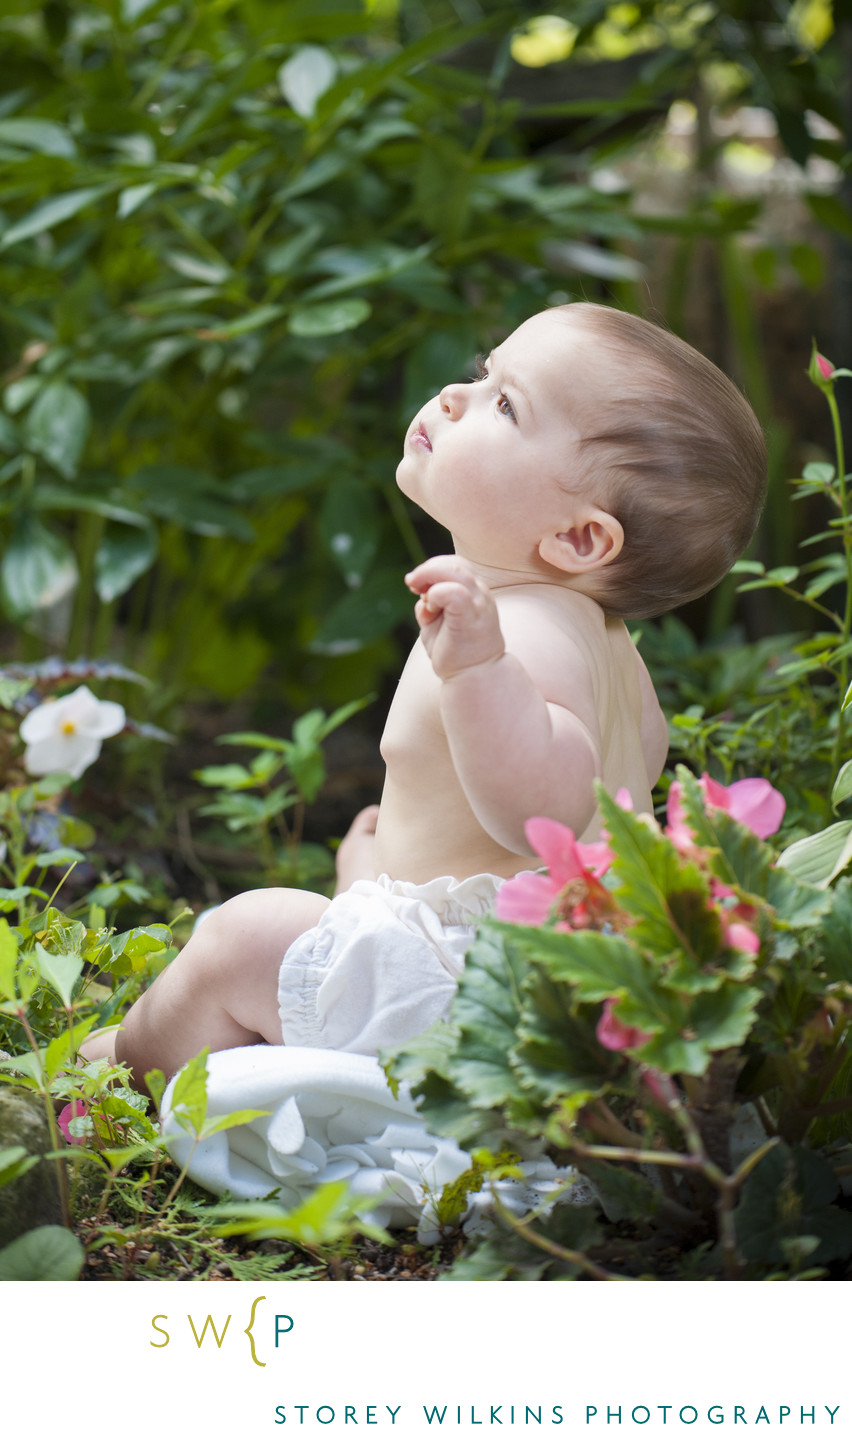 Classic Baby Portrait in the Backyard Garden